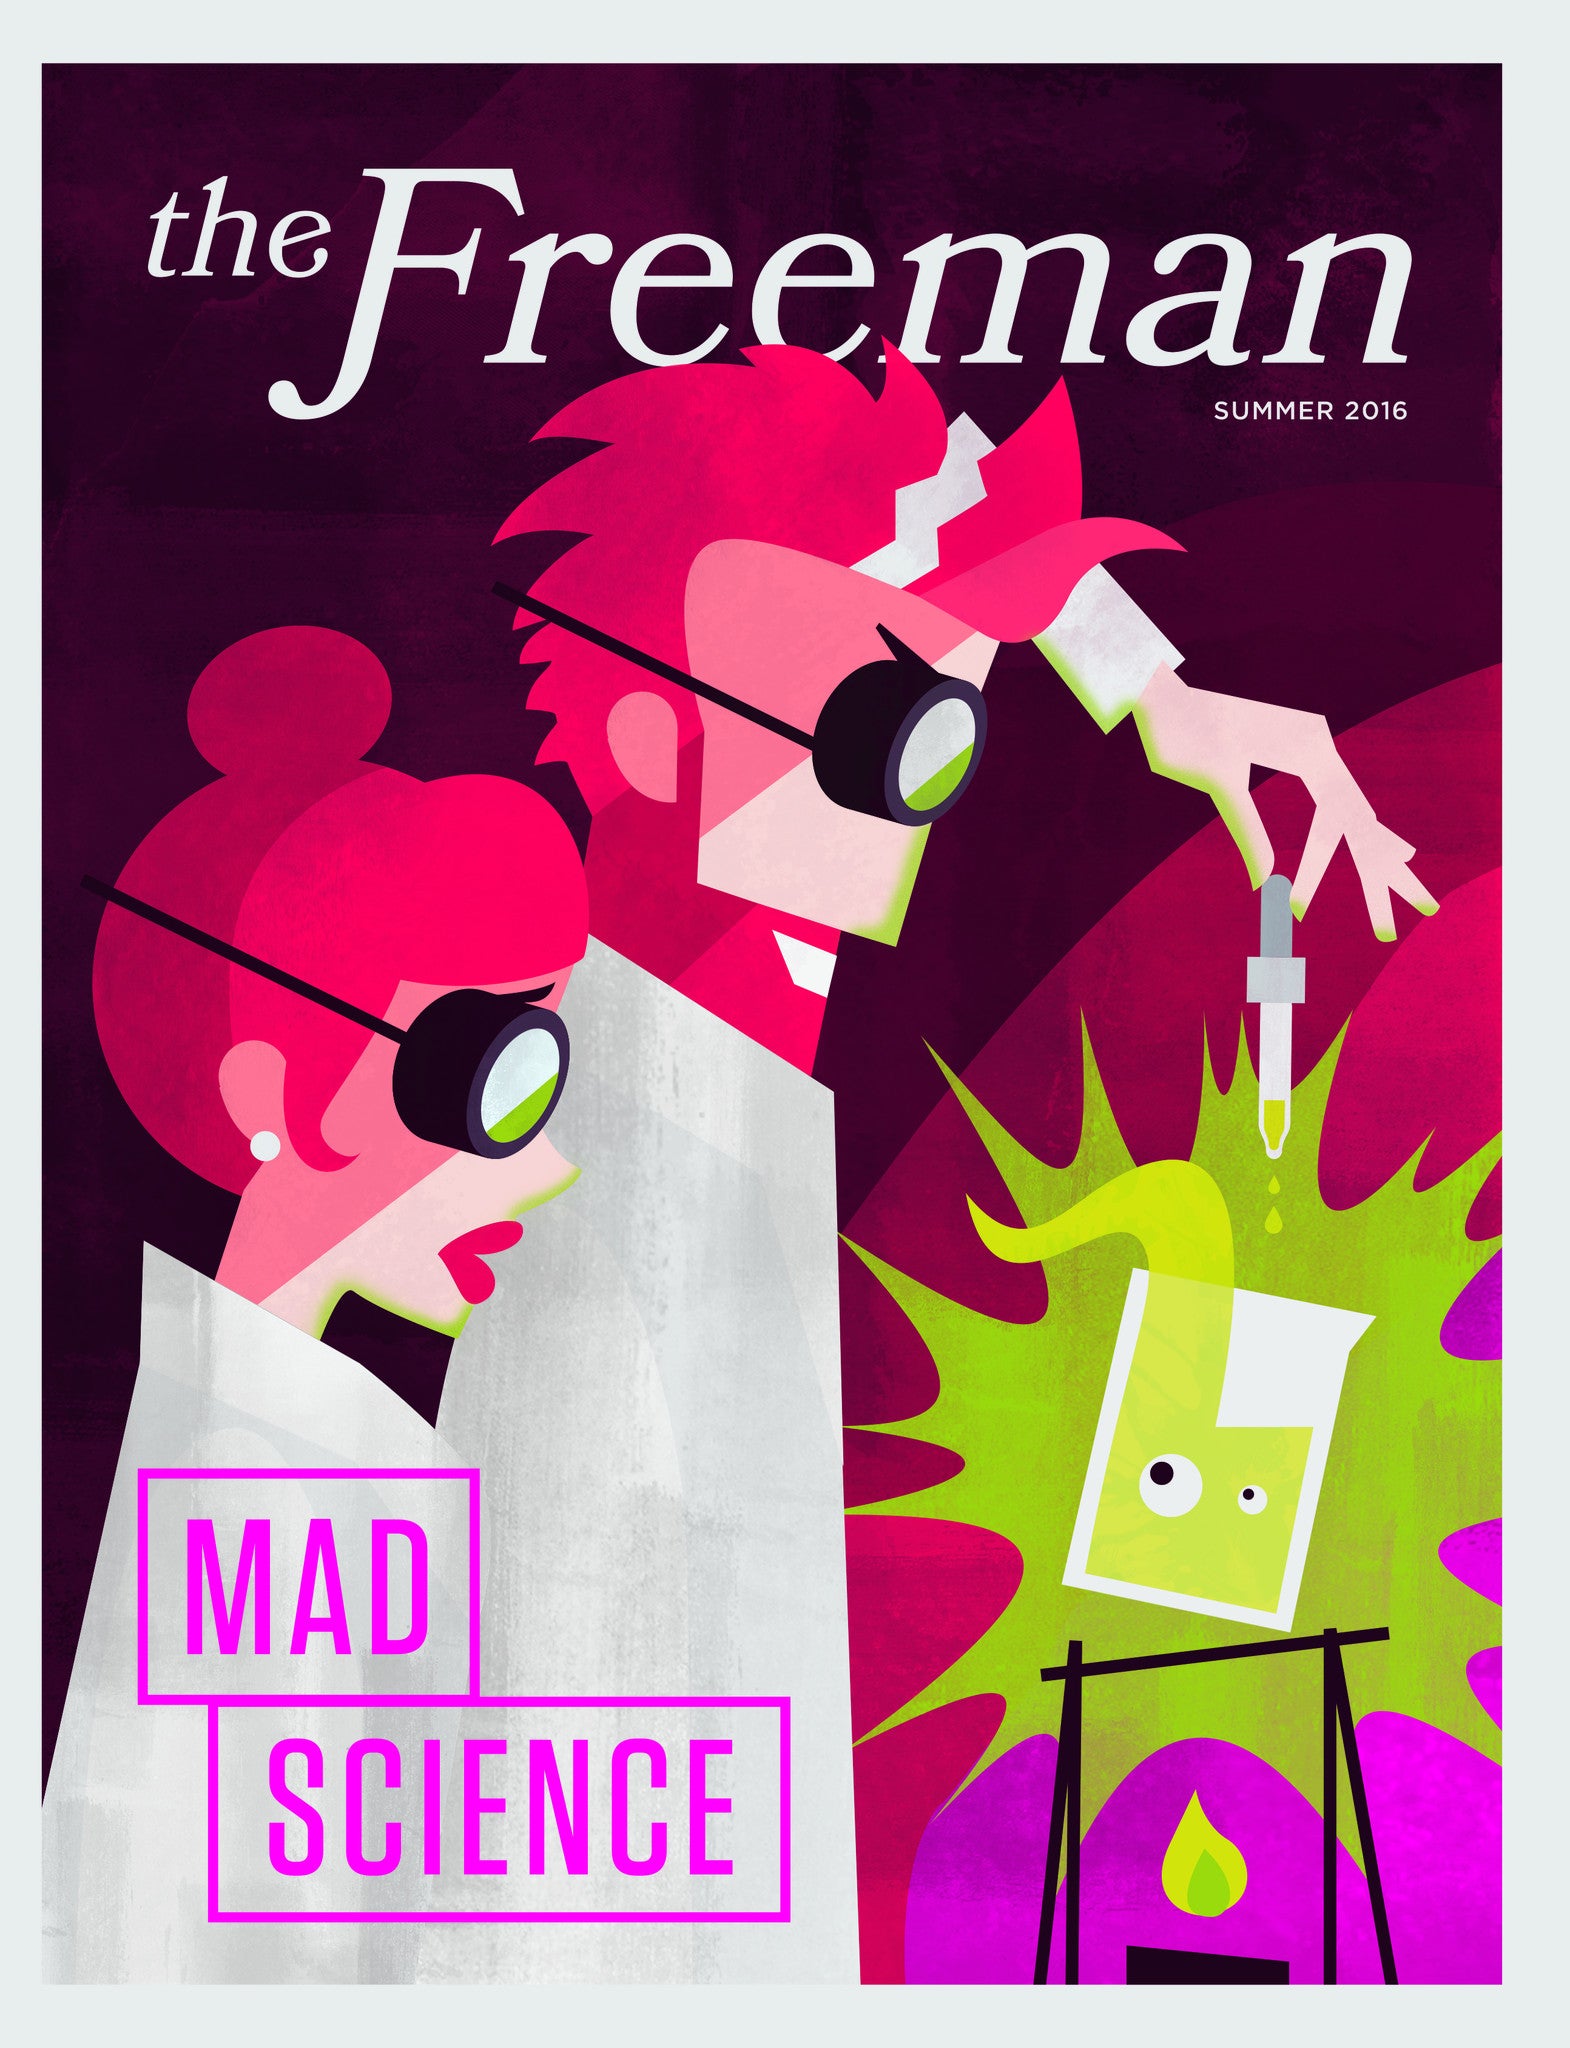 The Freeman Magazine - Summer 2016